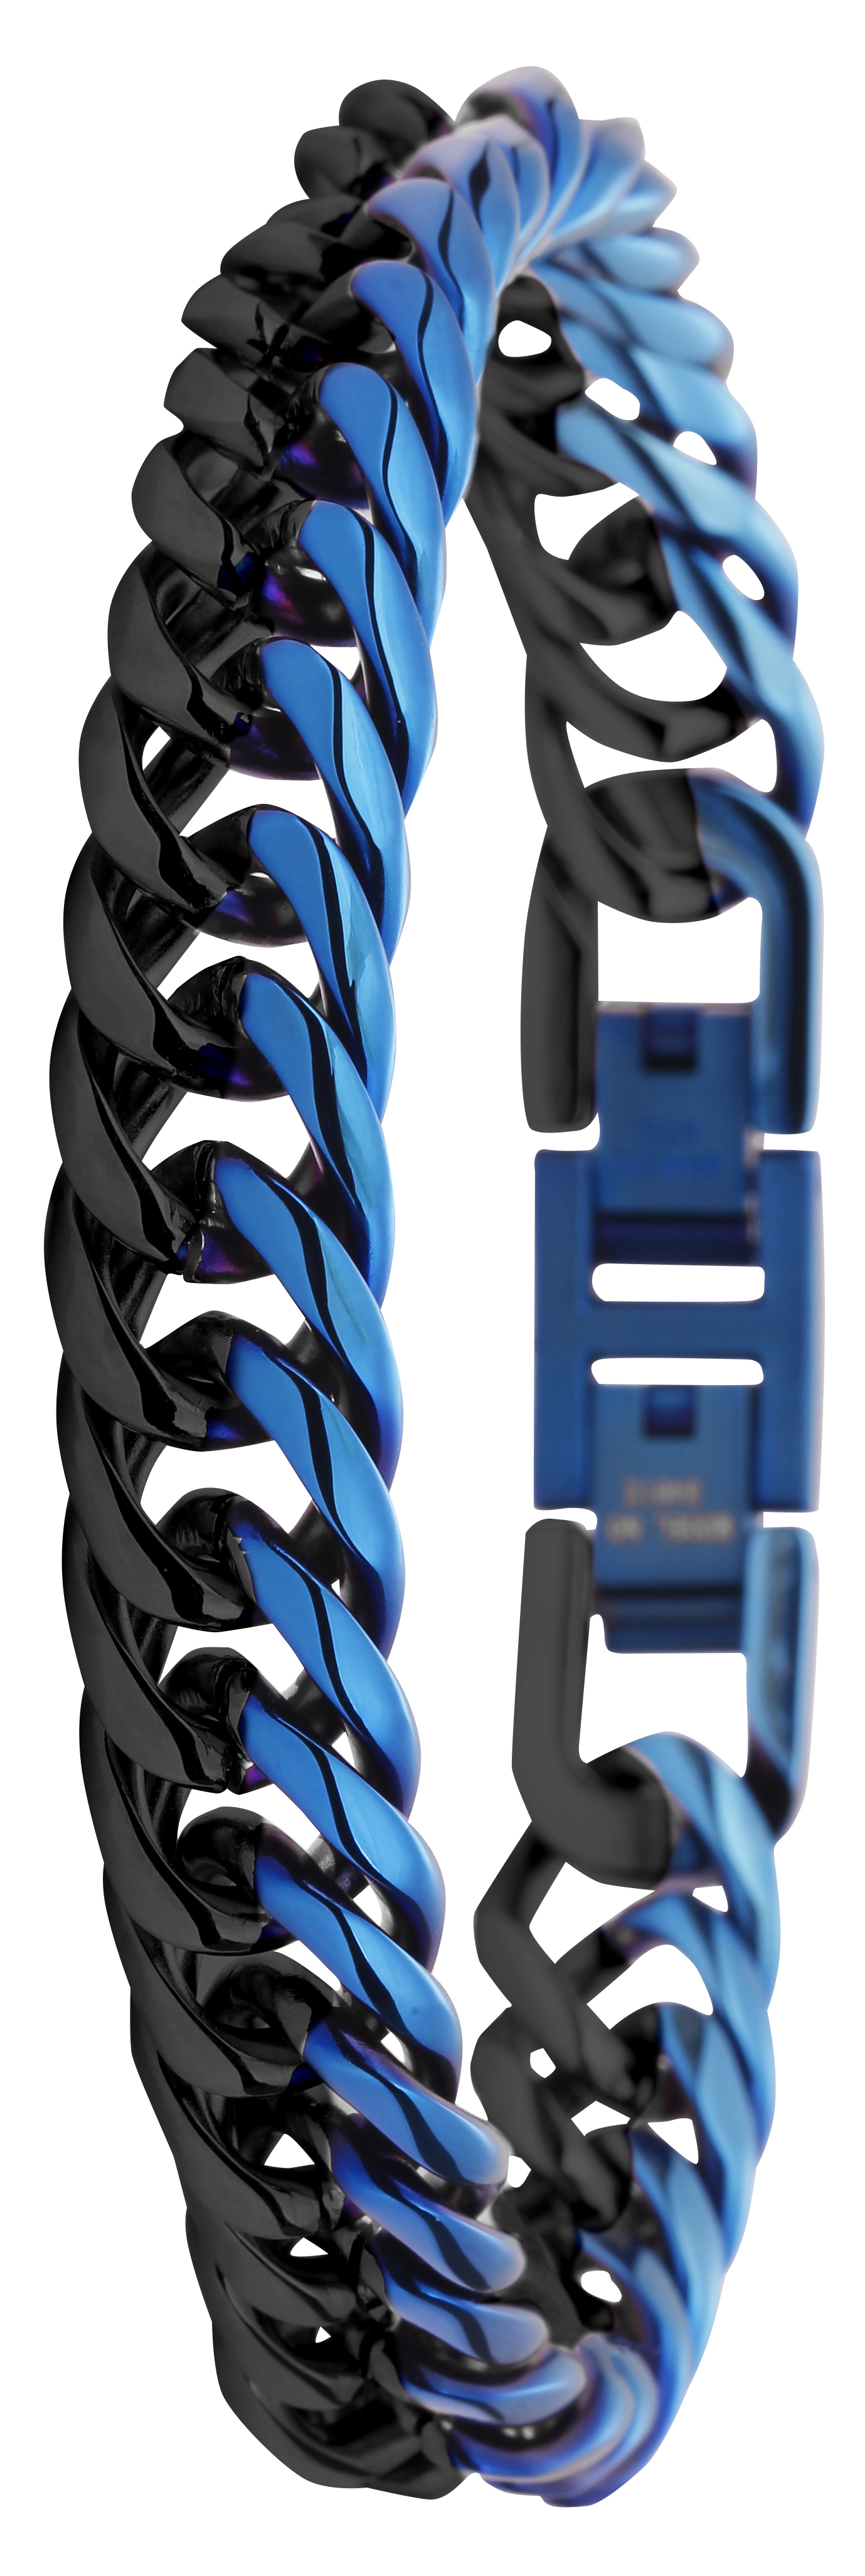 Invicta Elements Stainless Steel Bracelet, Black & Blue - (34813)